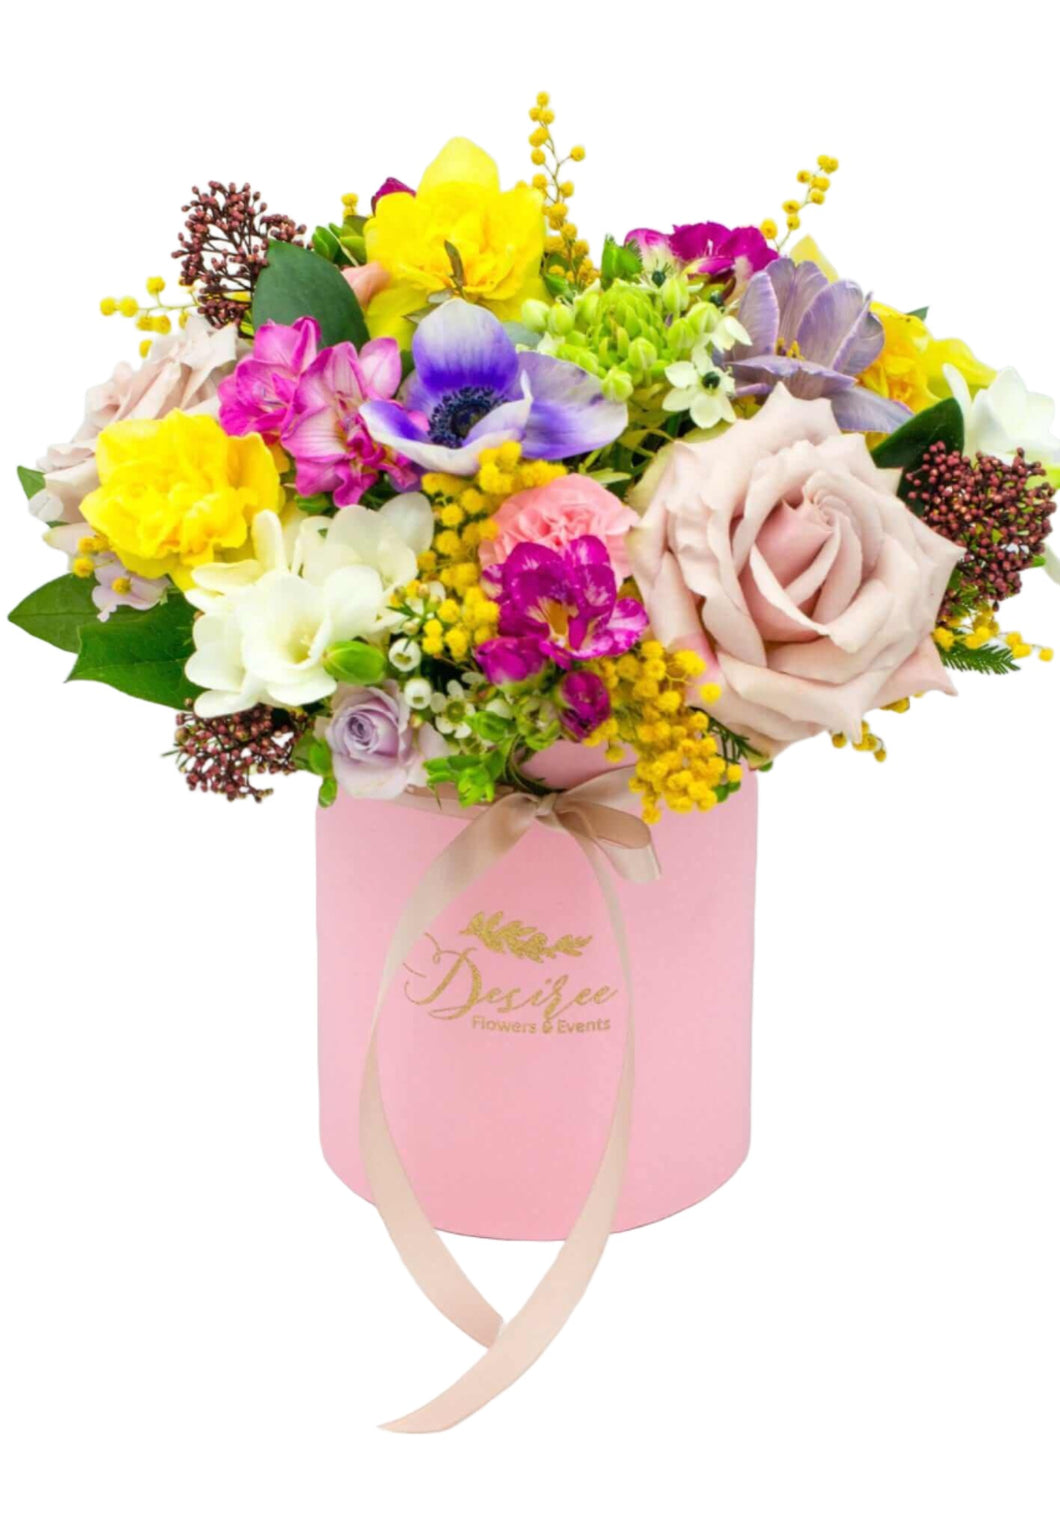 Aranjament Primavara 7 - Desiree FlowerShop